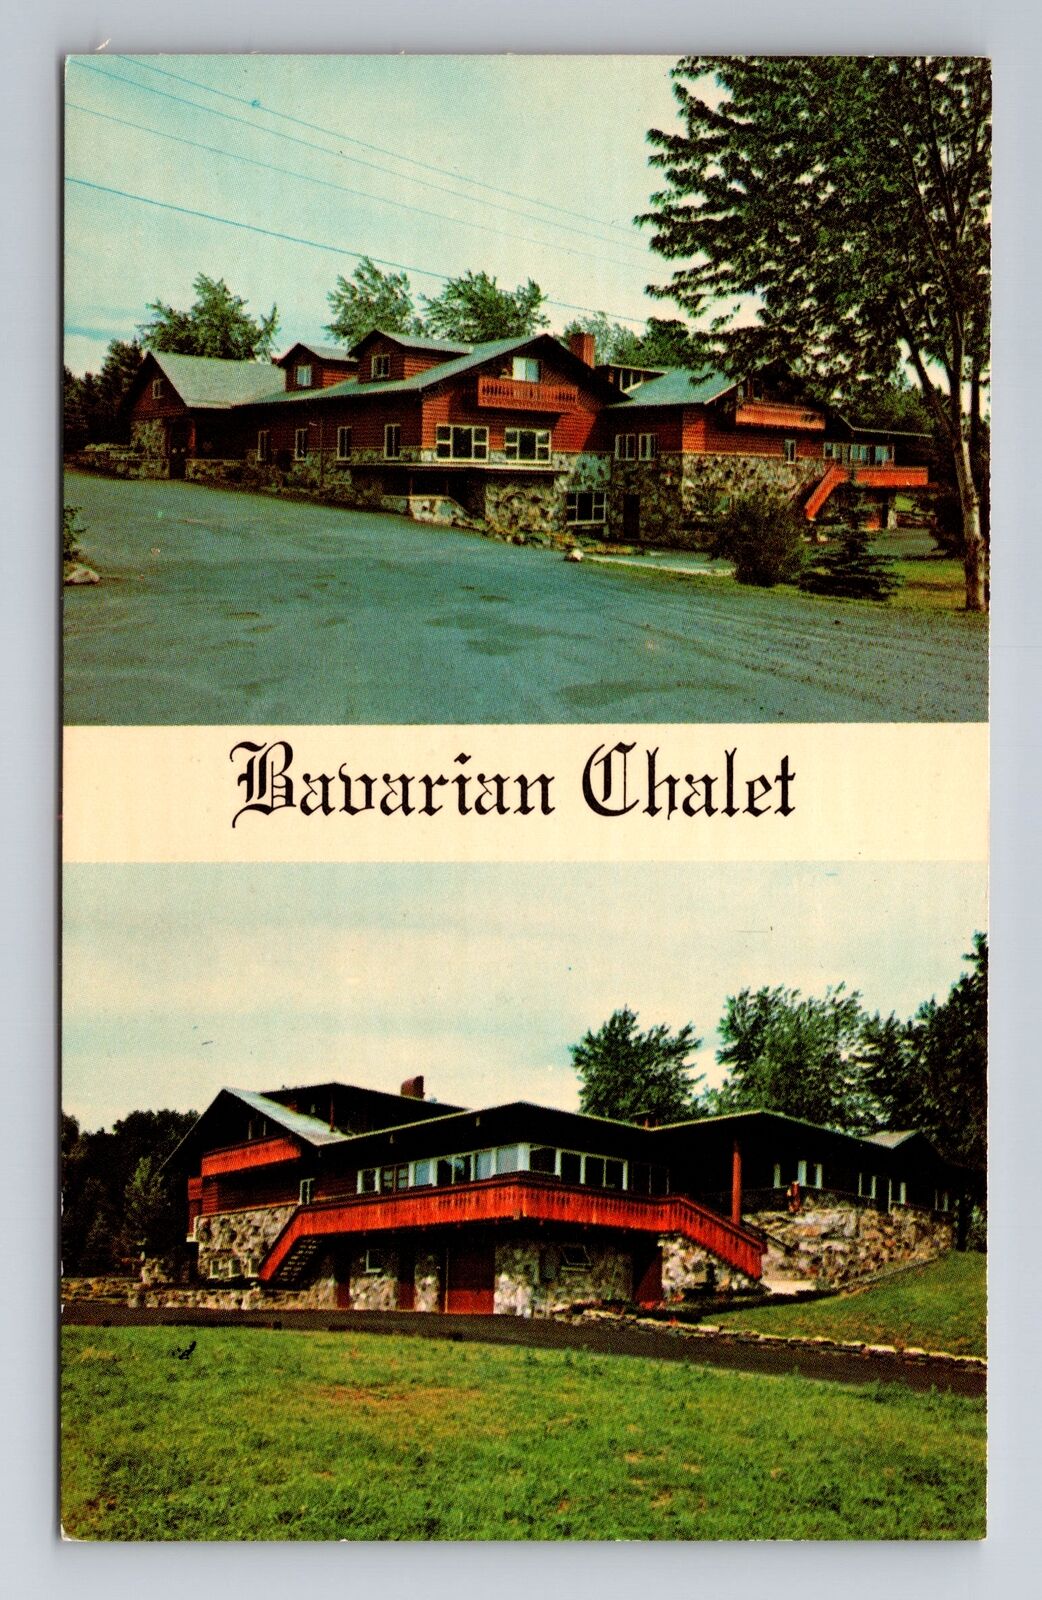 Albany NY-New York, Bavarian Chalet, Antique, Vintage Souvenir Postcard